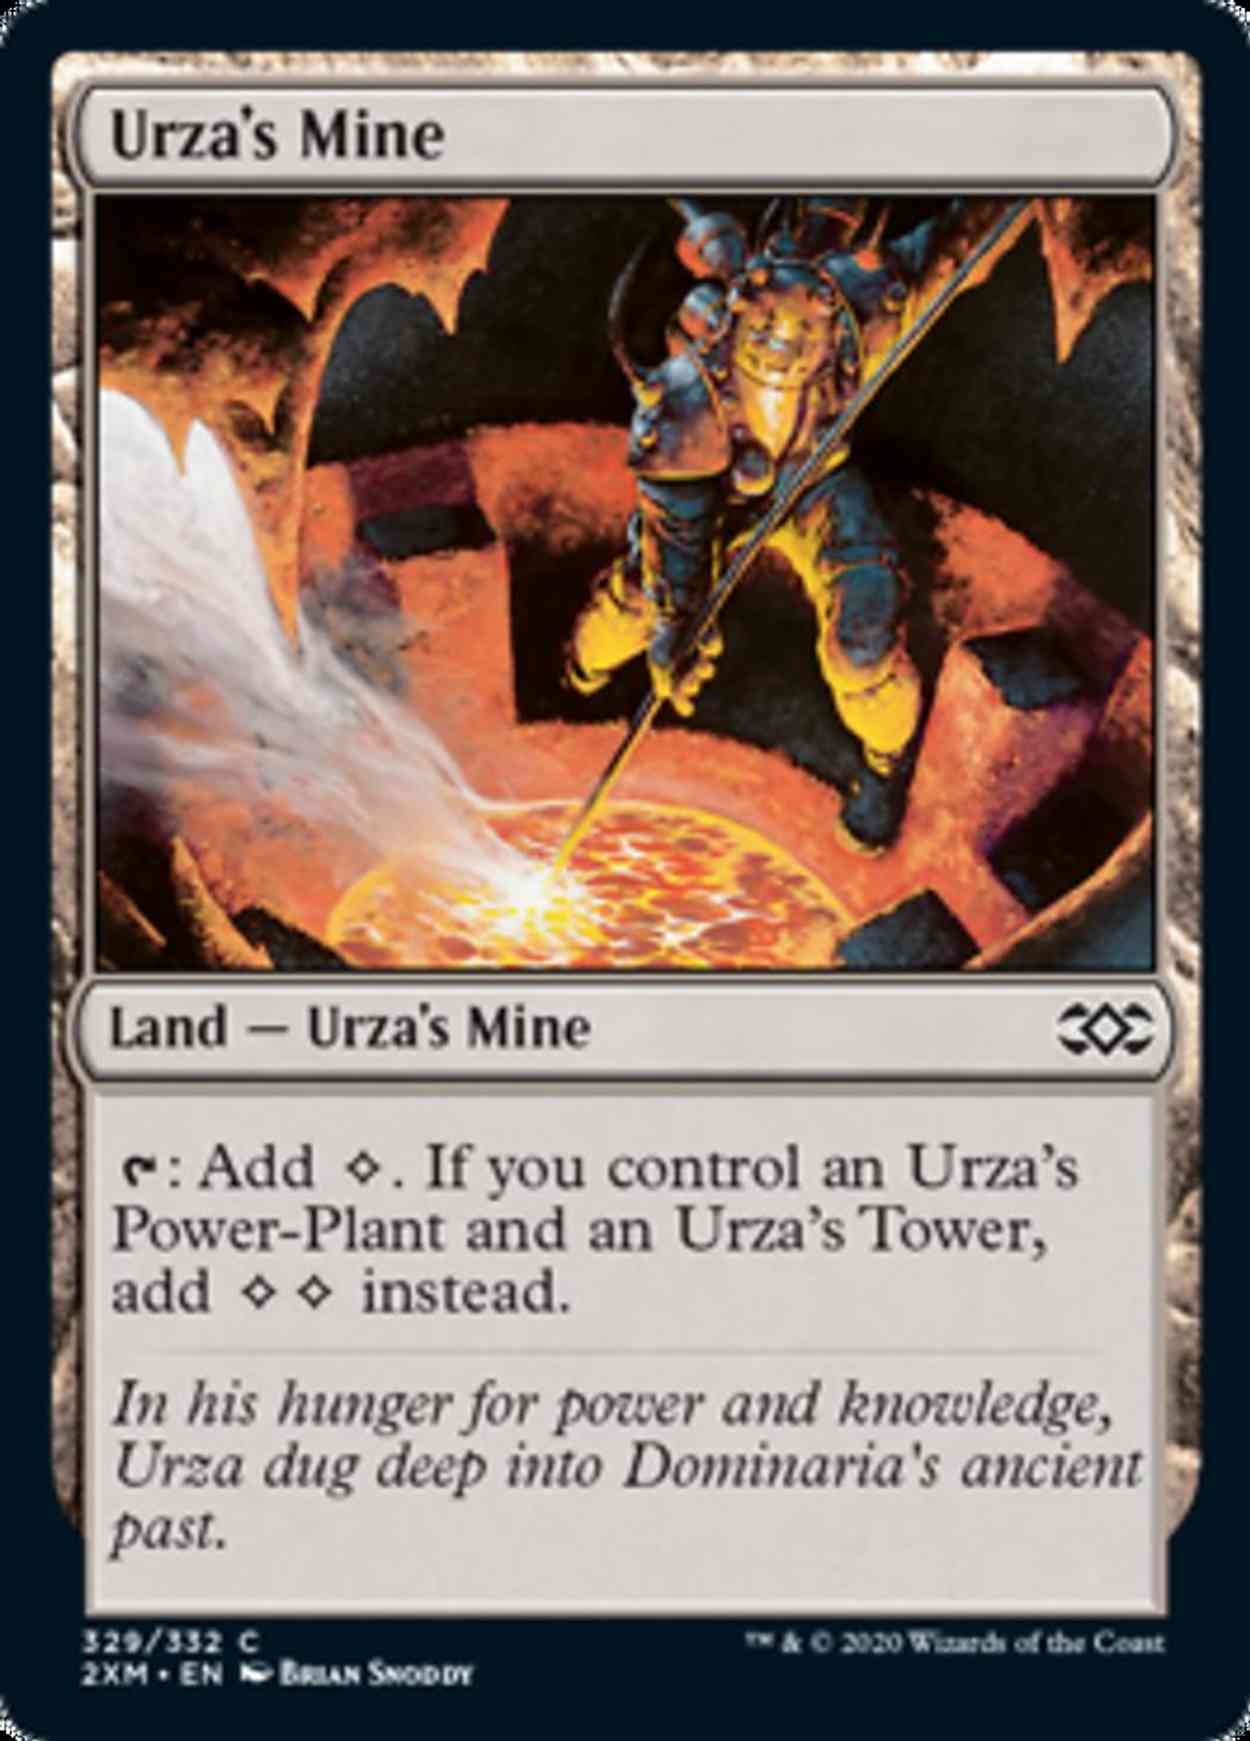 Urza's Mine magic card front